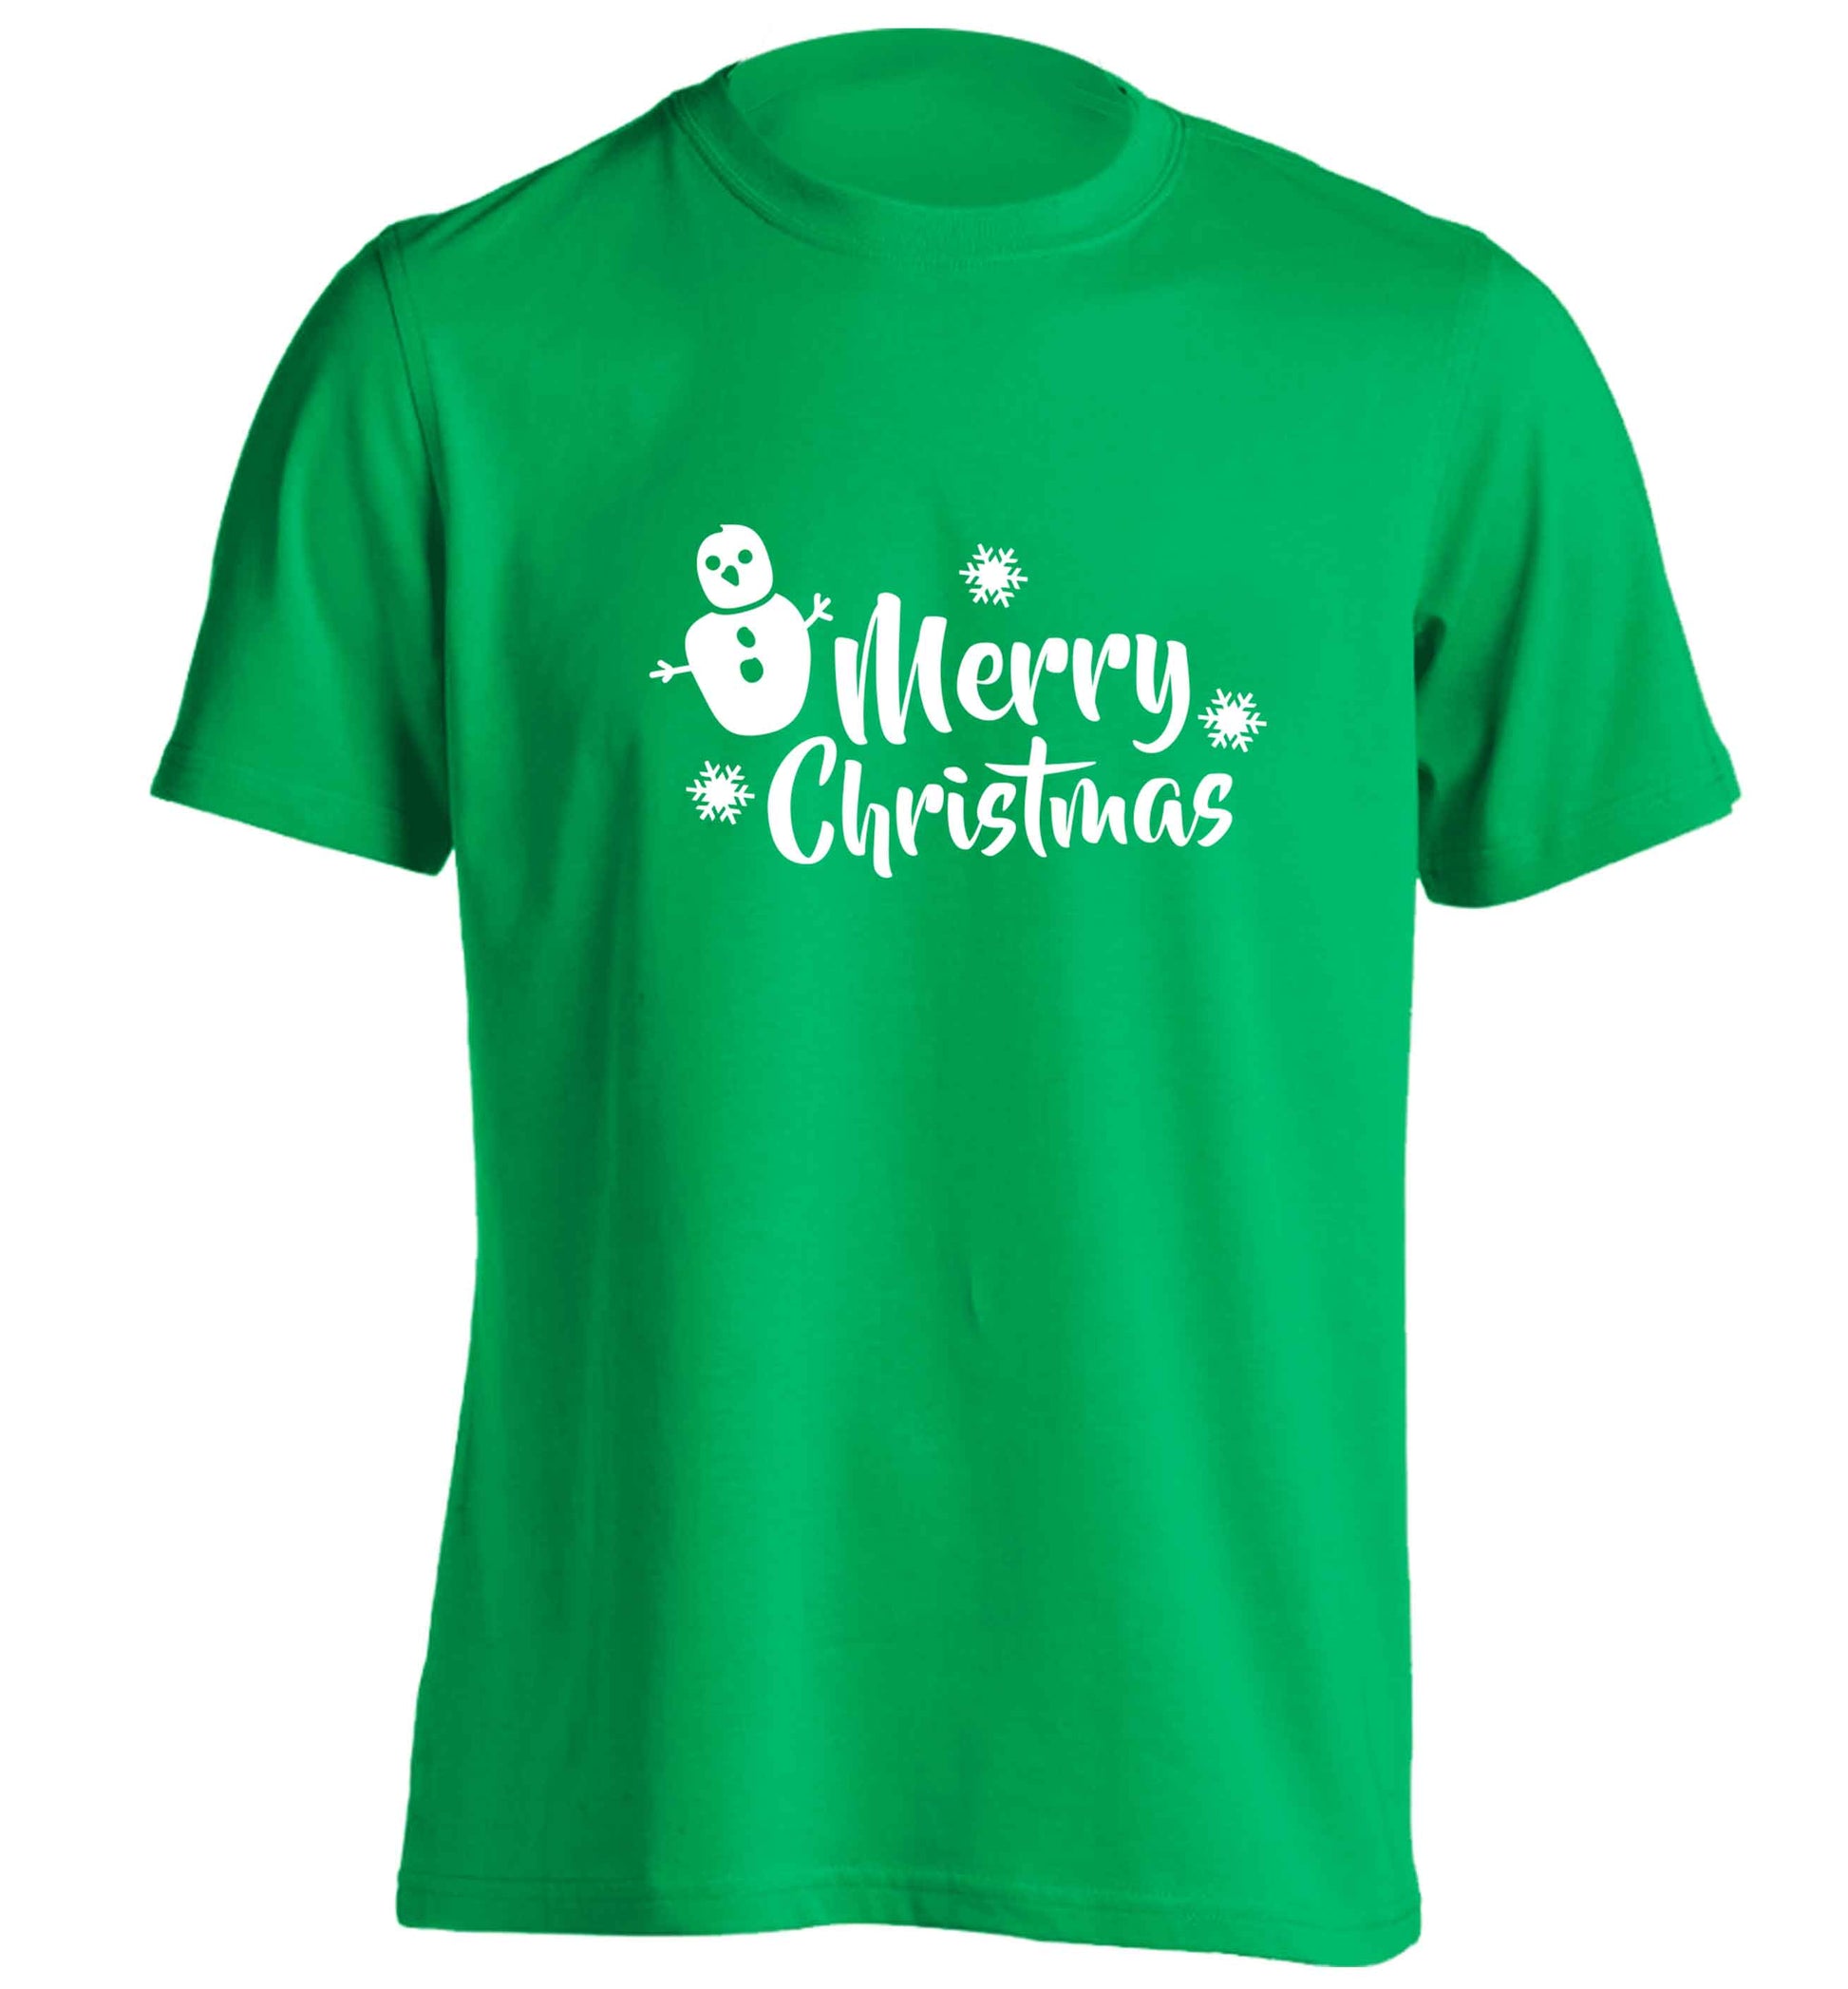 Merry Christmas - snowman adults unisex green Tshirt 2XL